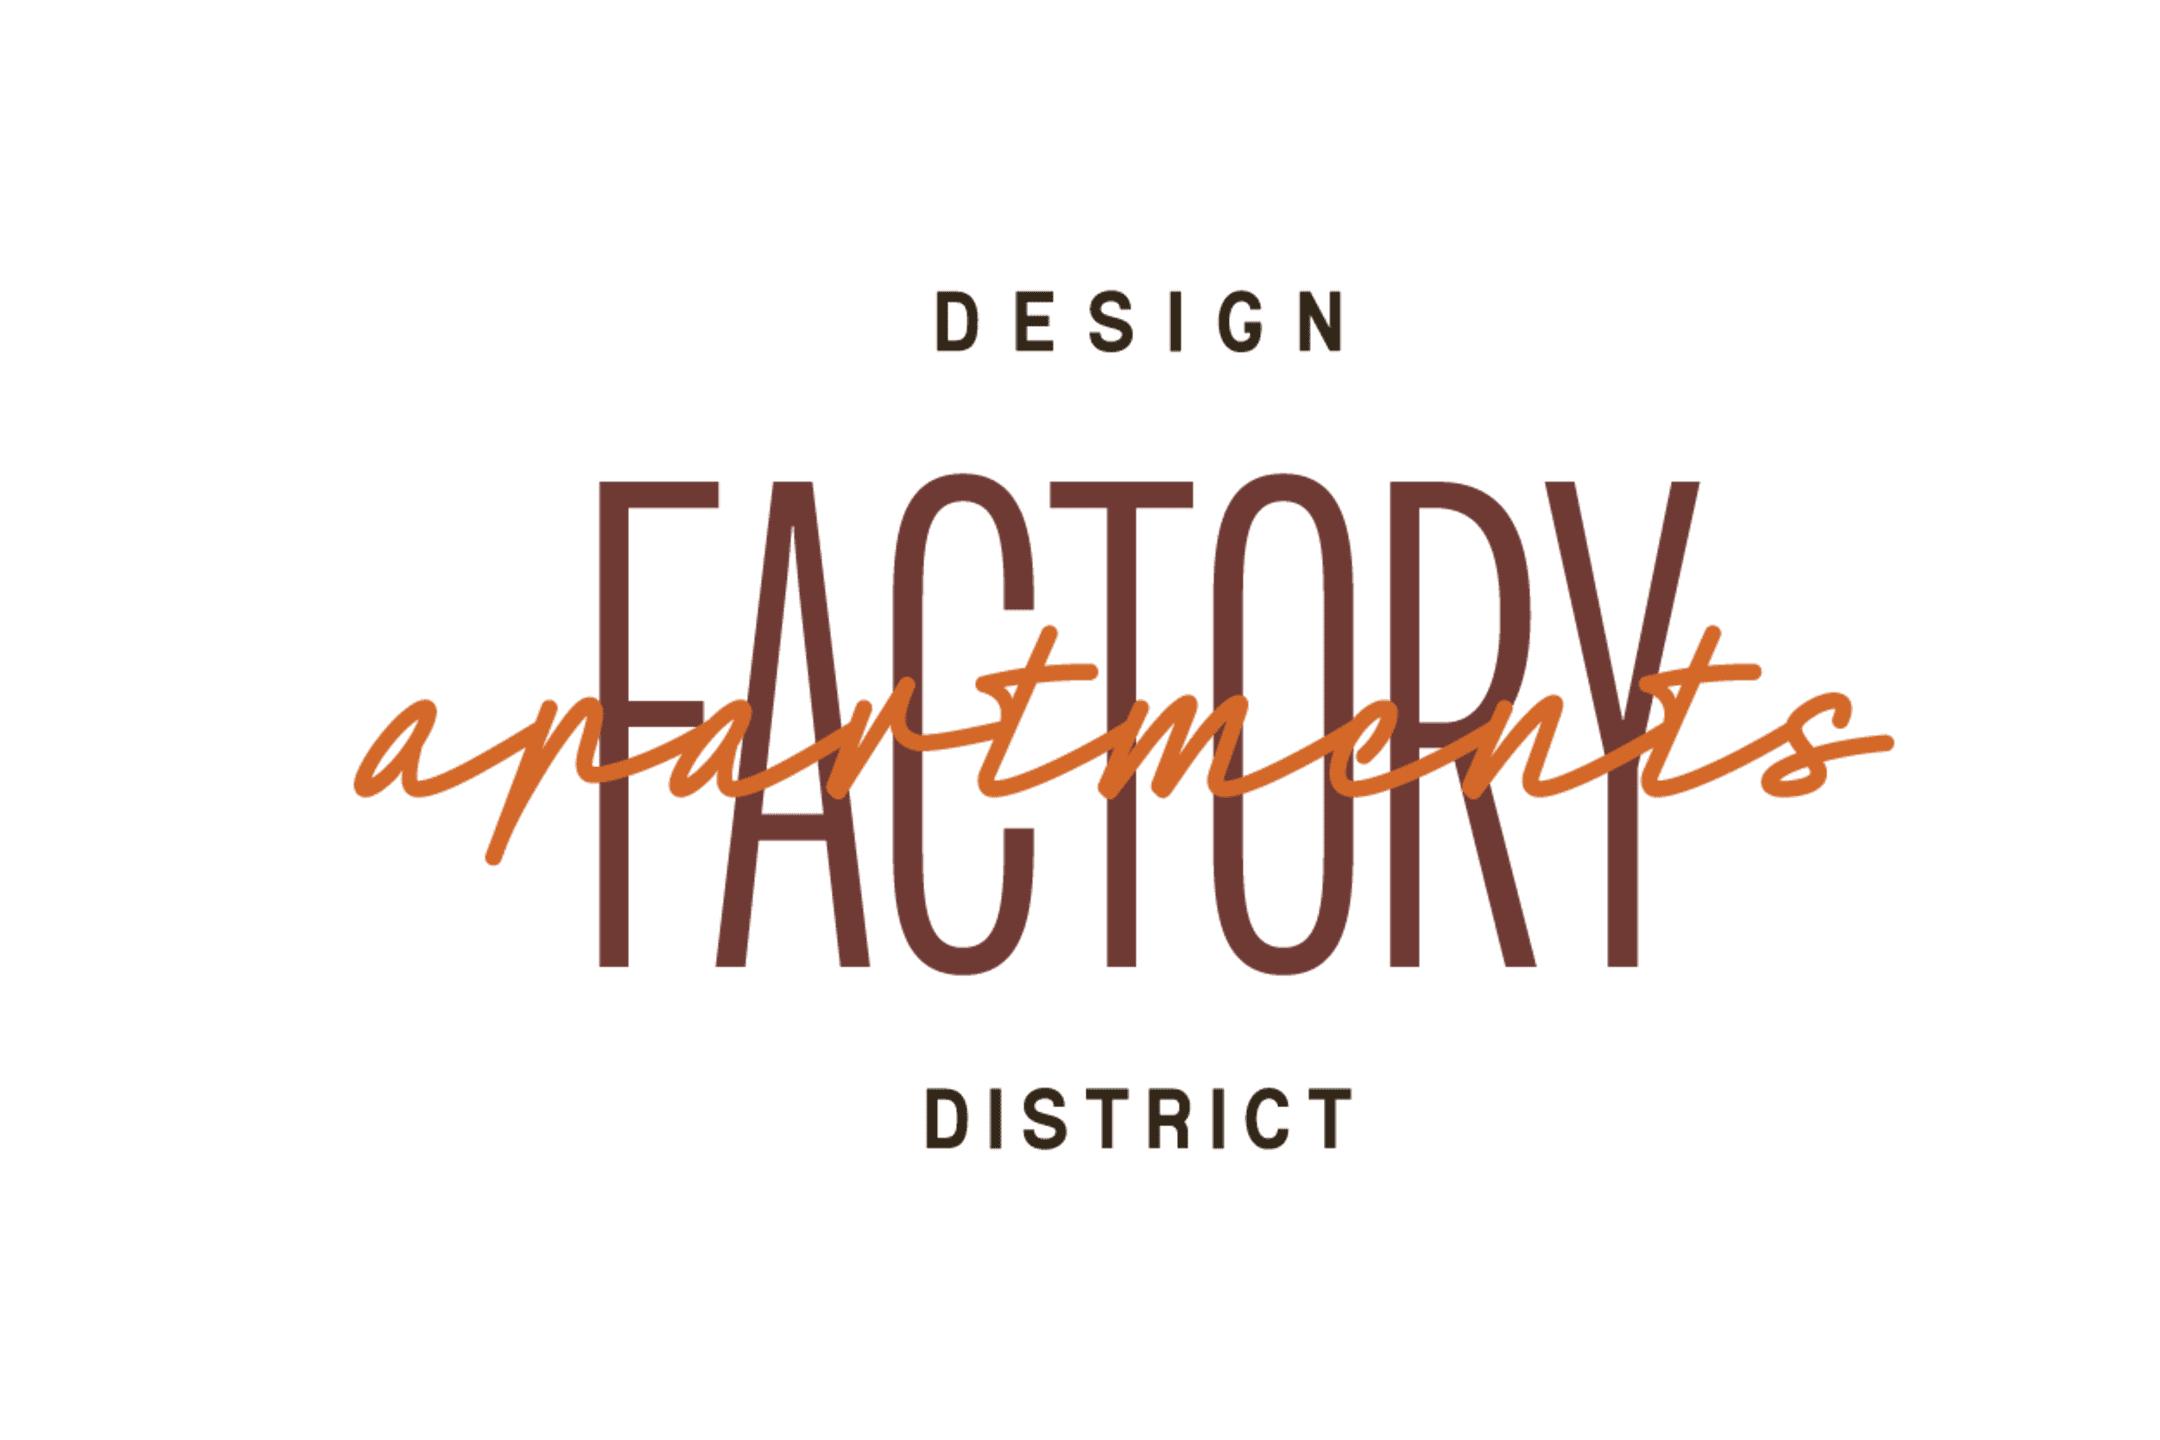 Factory Design District - Dallas, TX